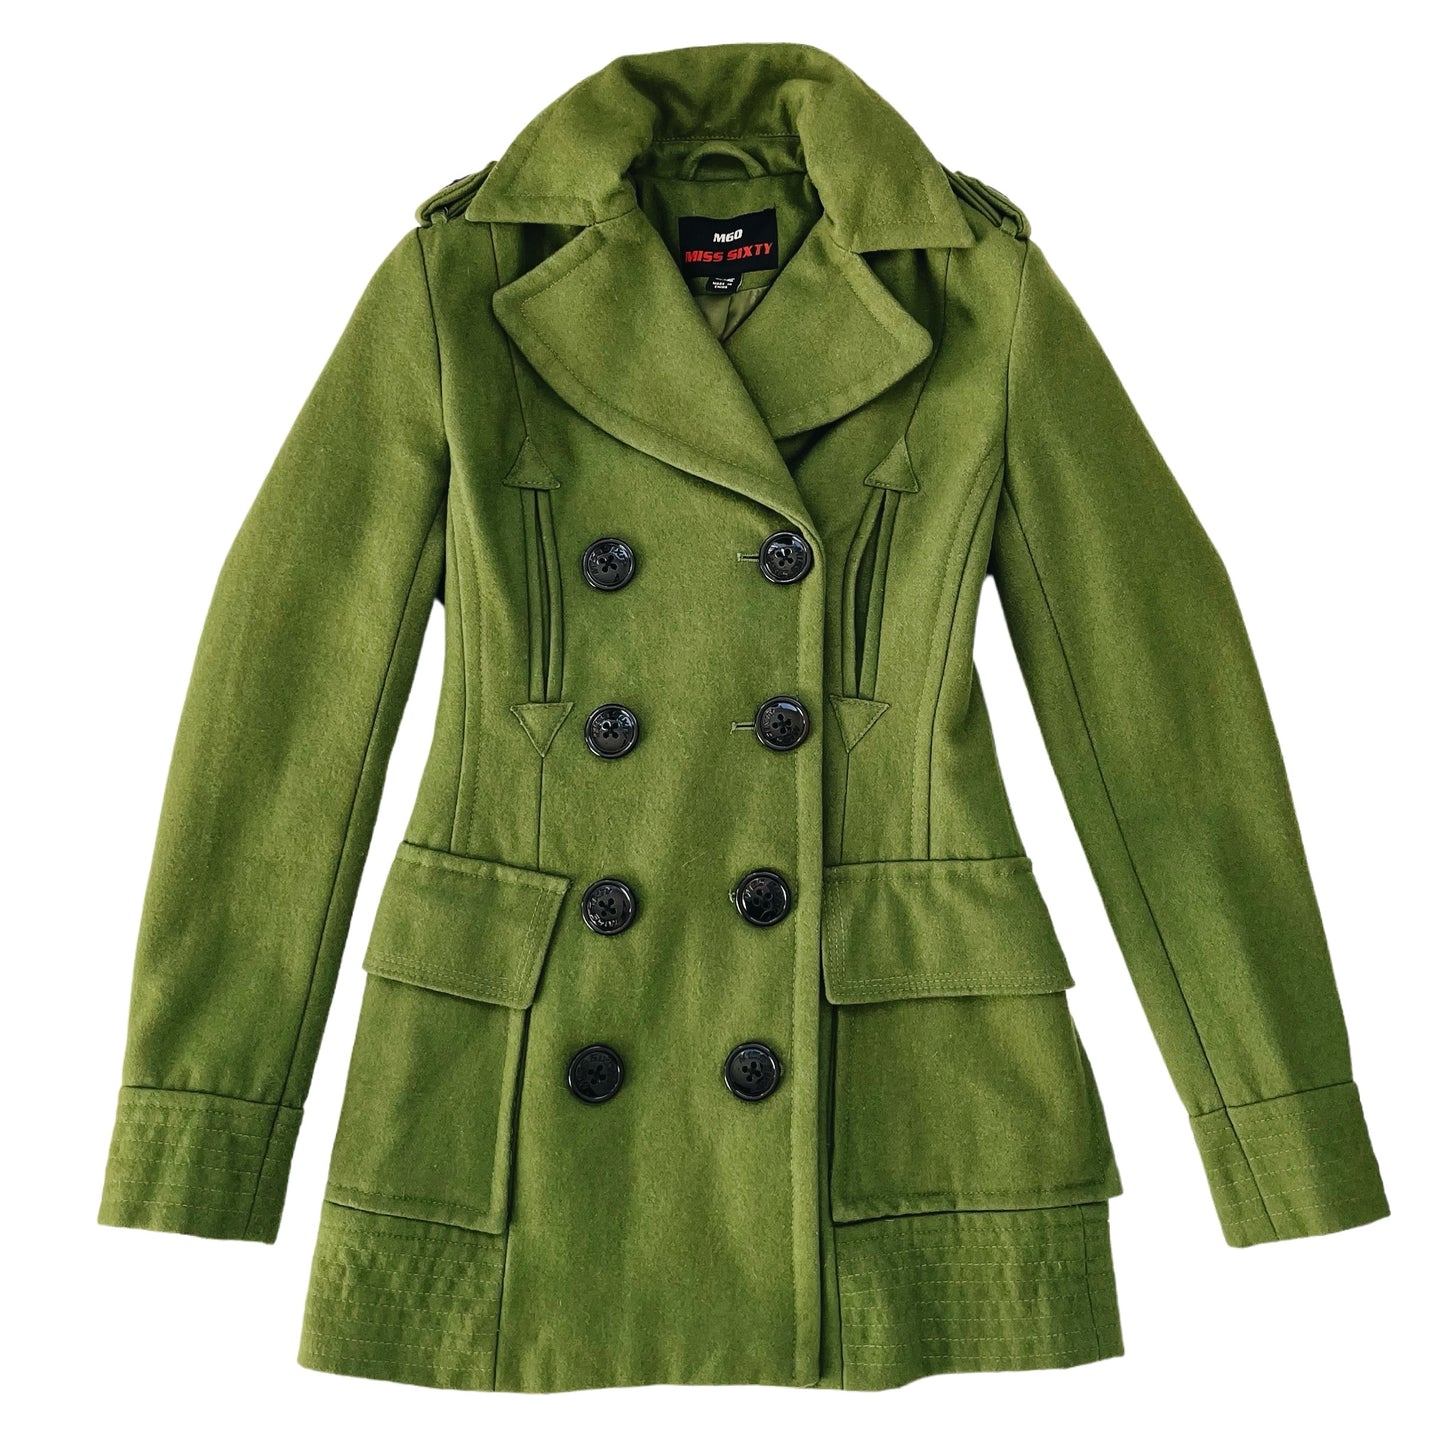 Miss Sixty Pea Green Coat